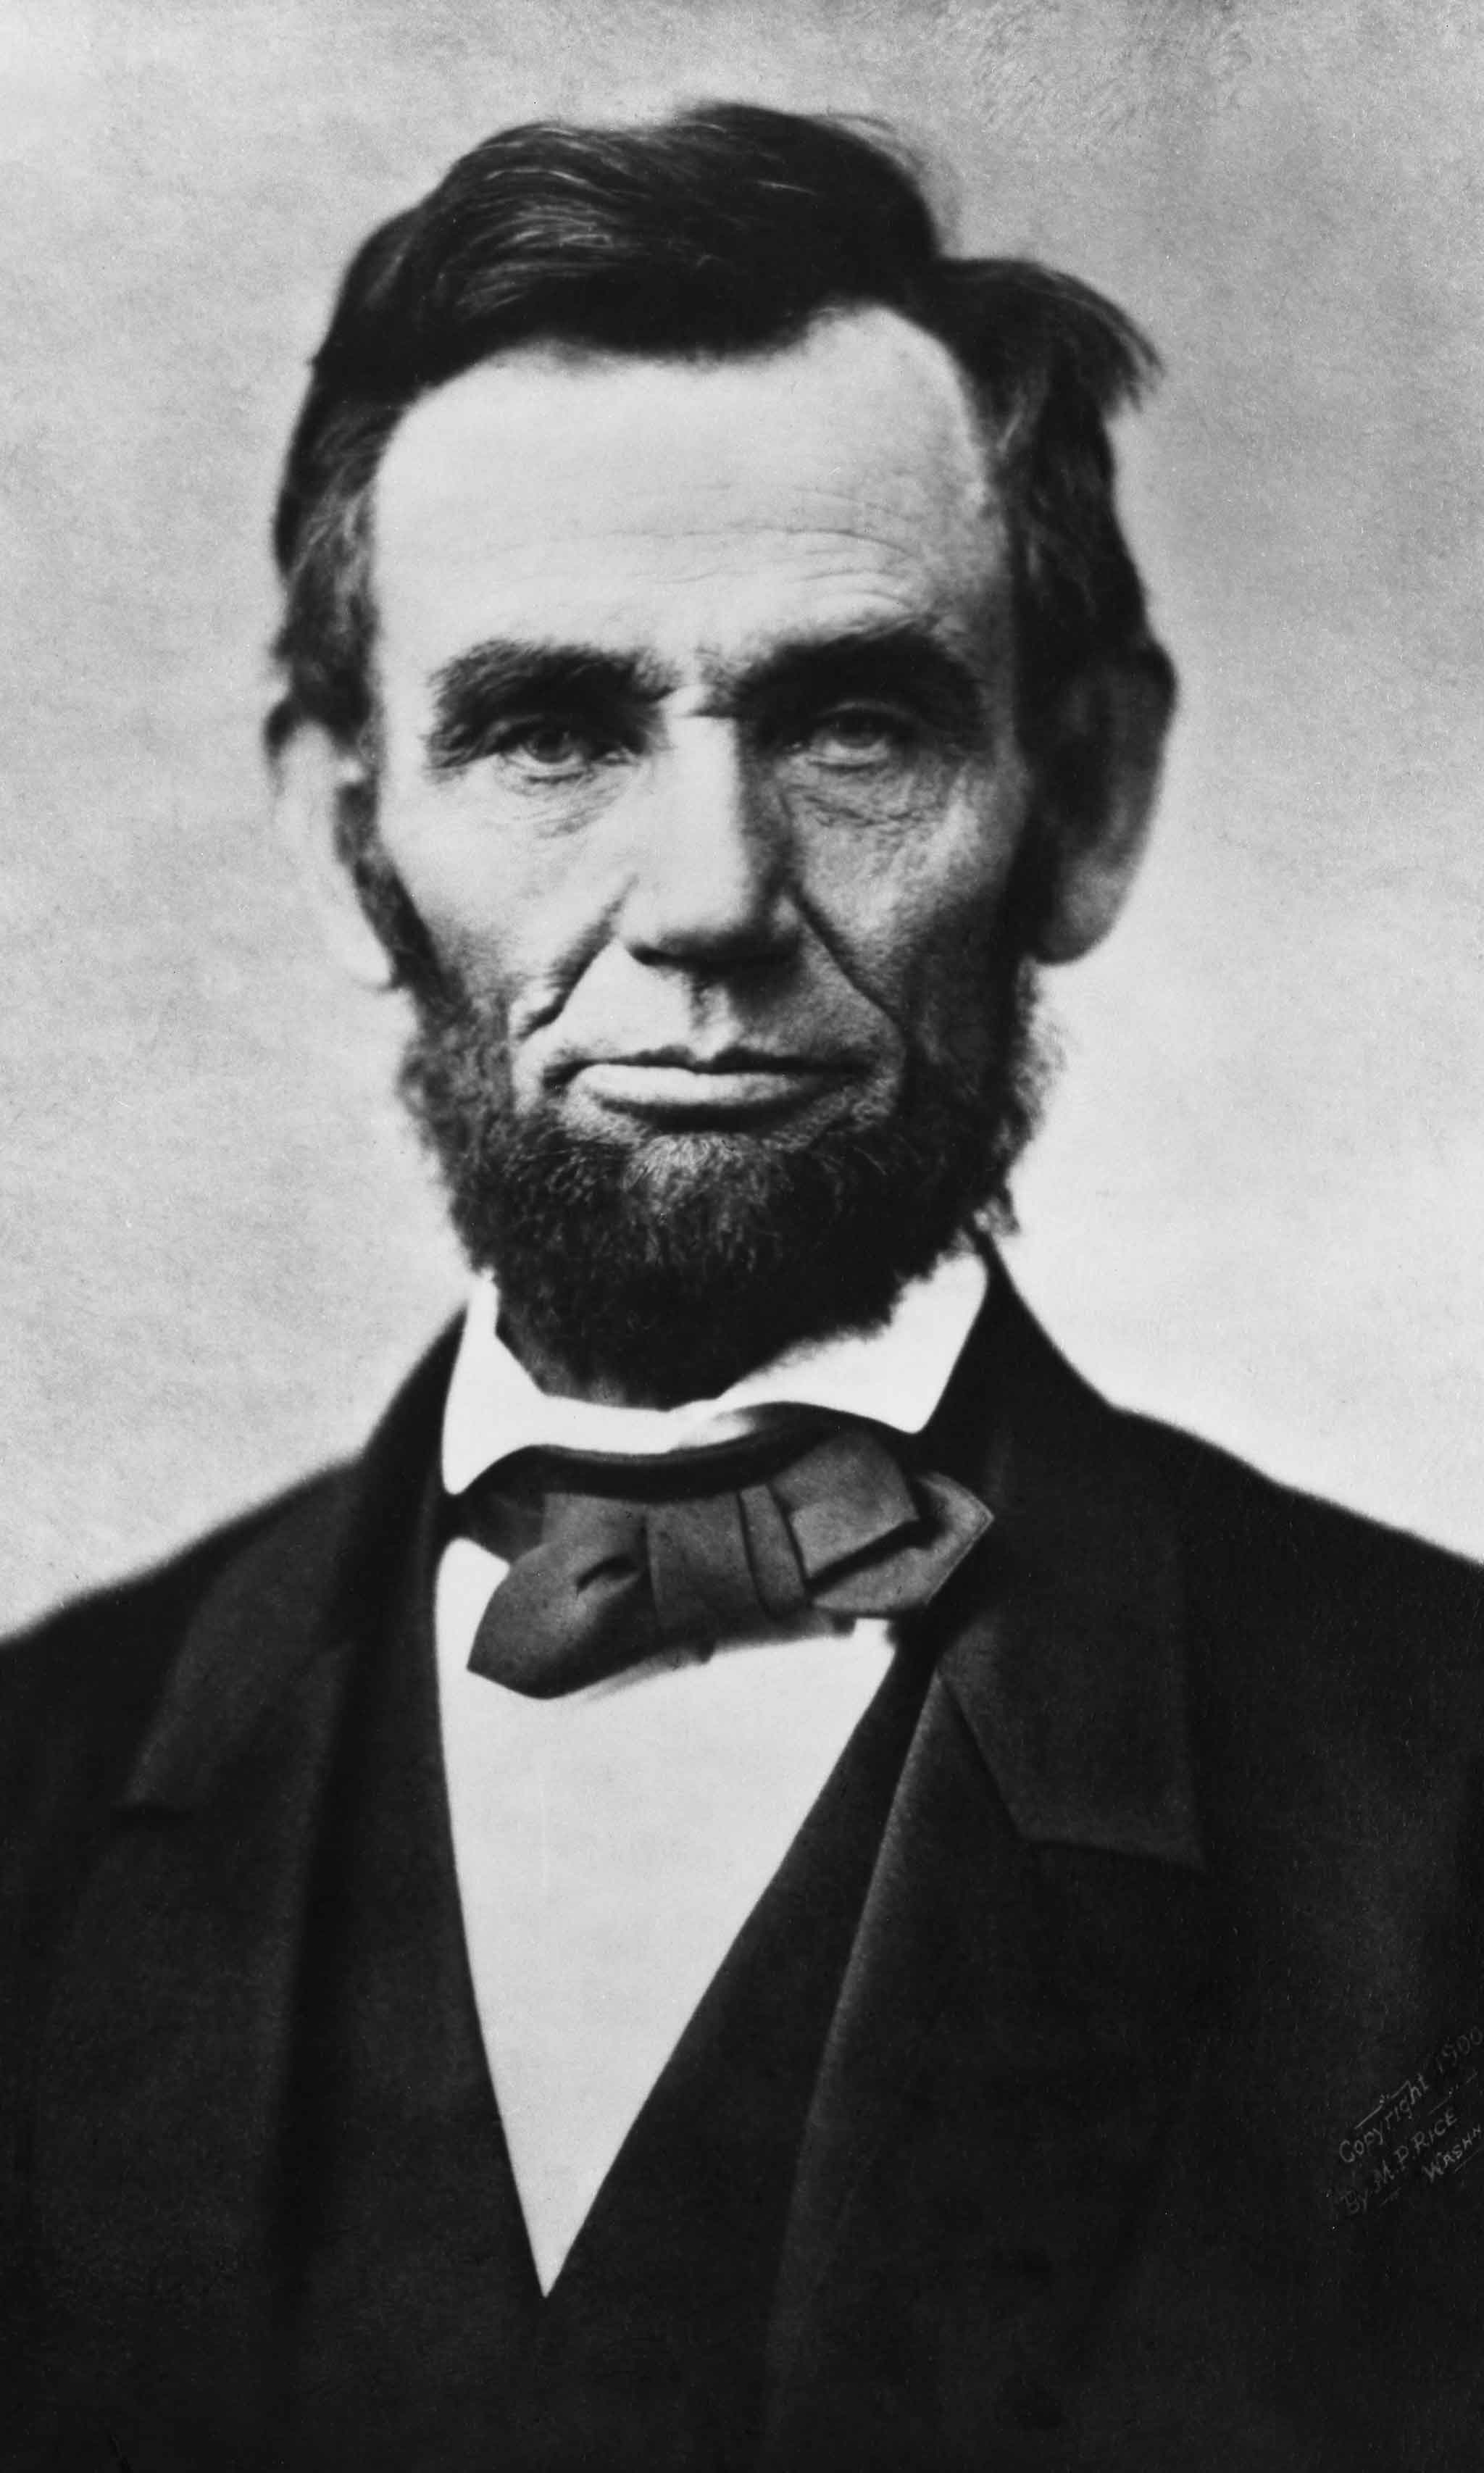 Portrait of Abraham Lincoln | Image courtesy of Wikipedia